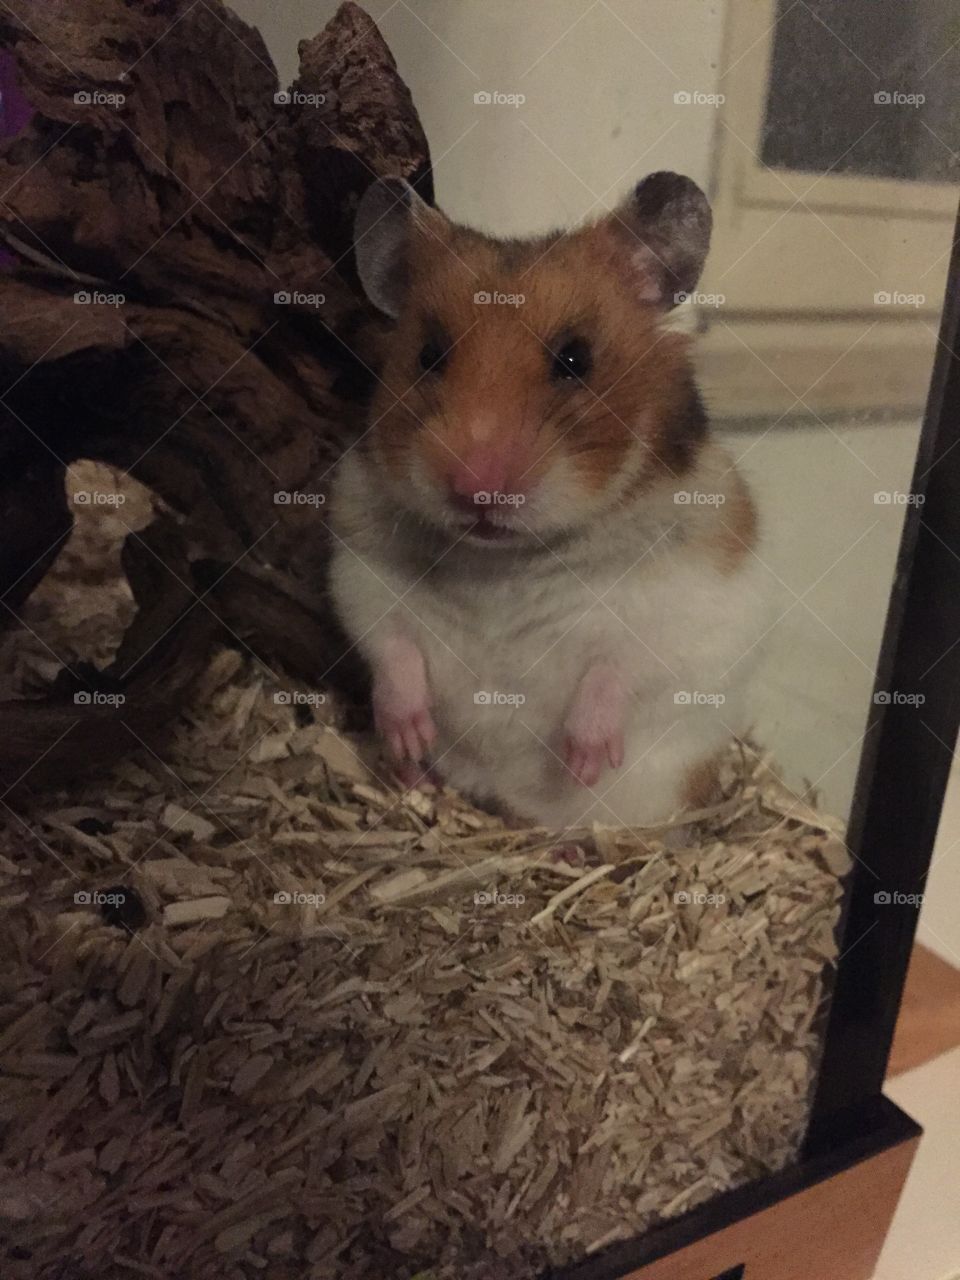 Hana the hamster